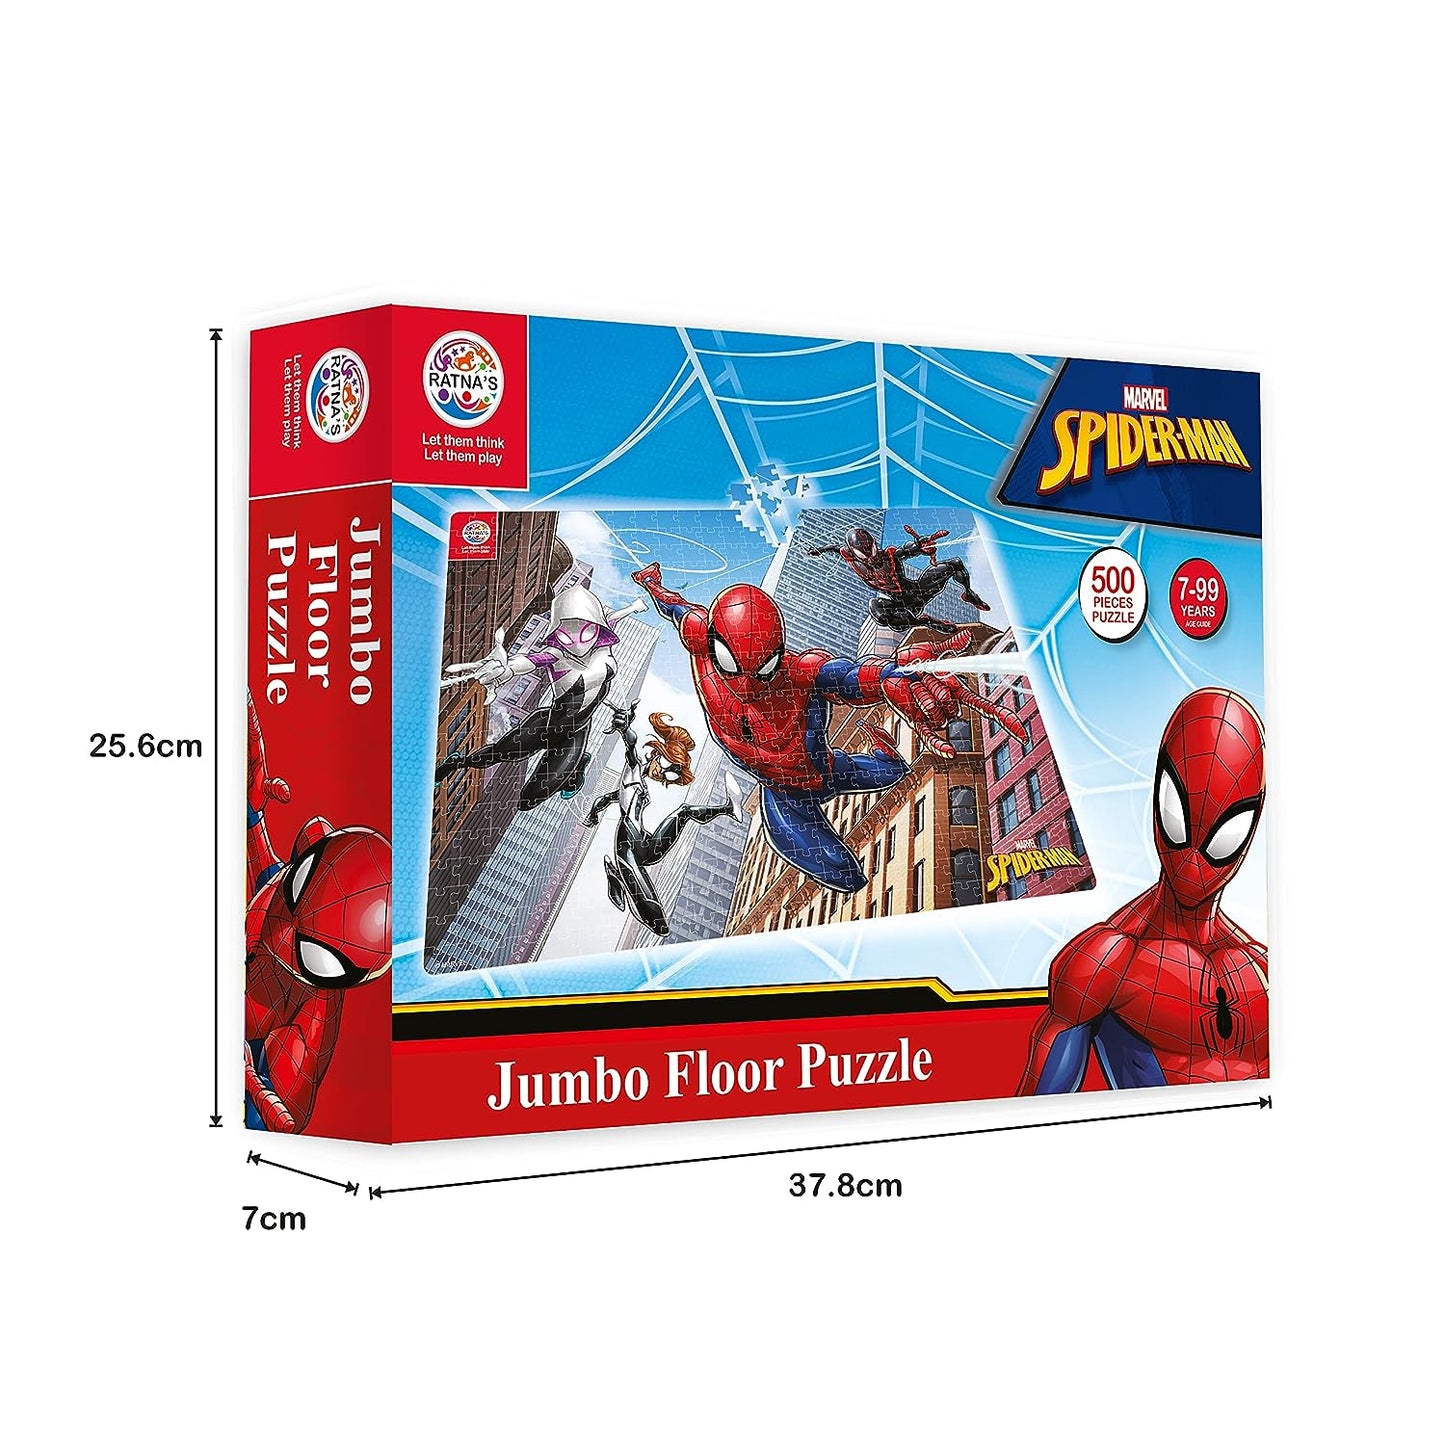 Ratna's Marvel Spiderman 500 Pieces Jumbo Floor Jigsaw Puzzle